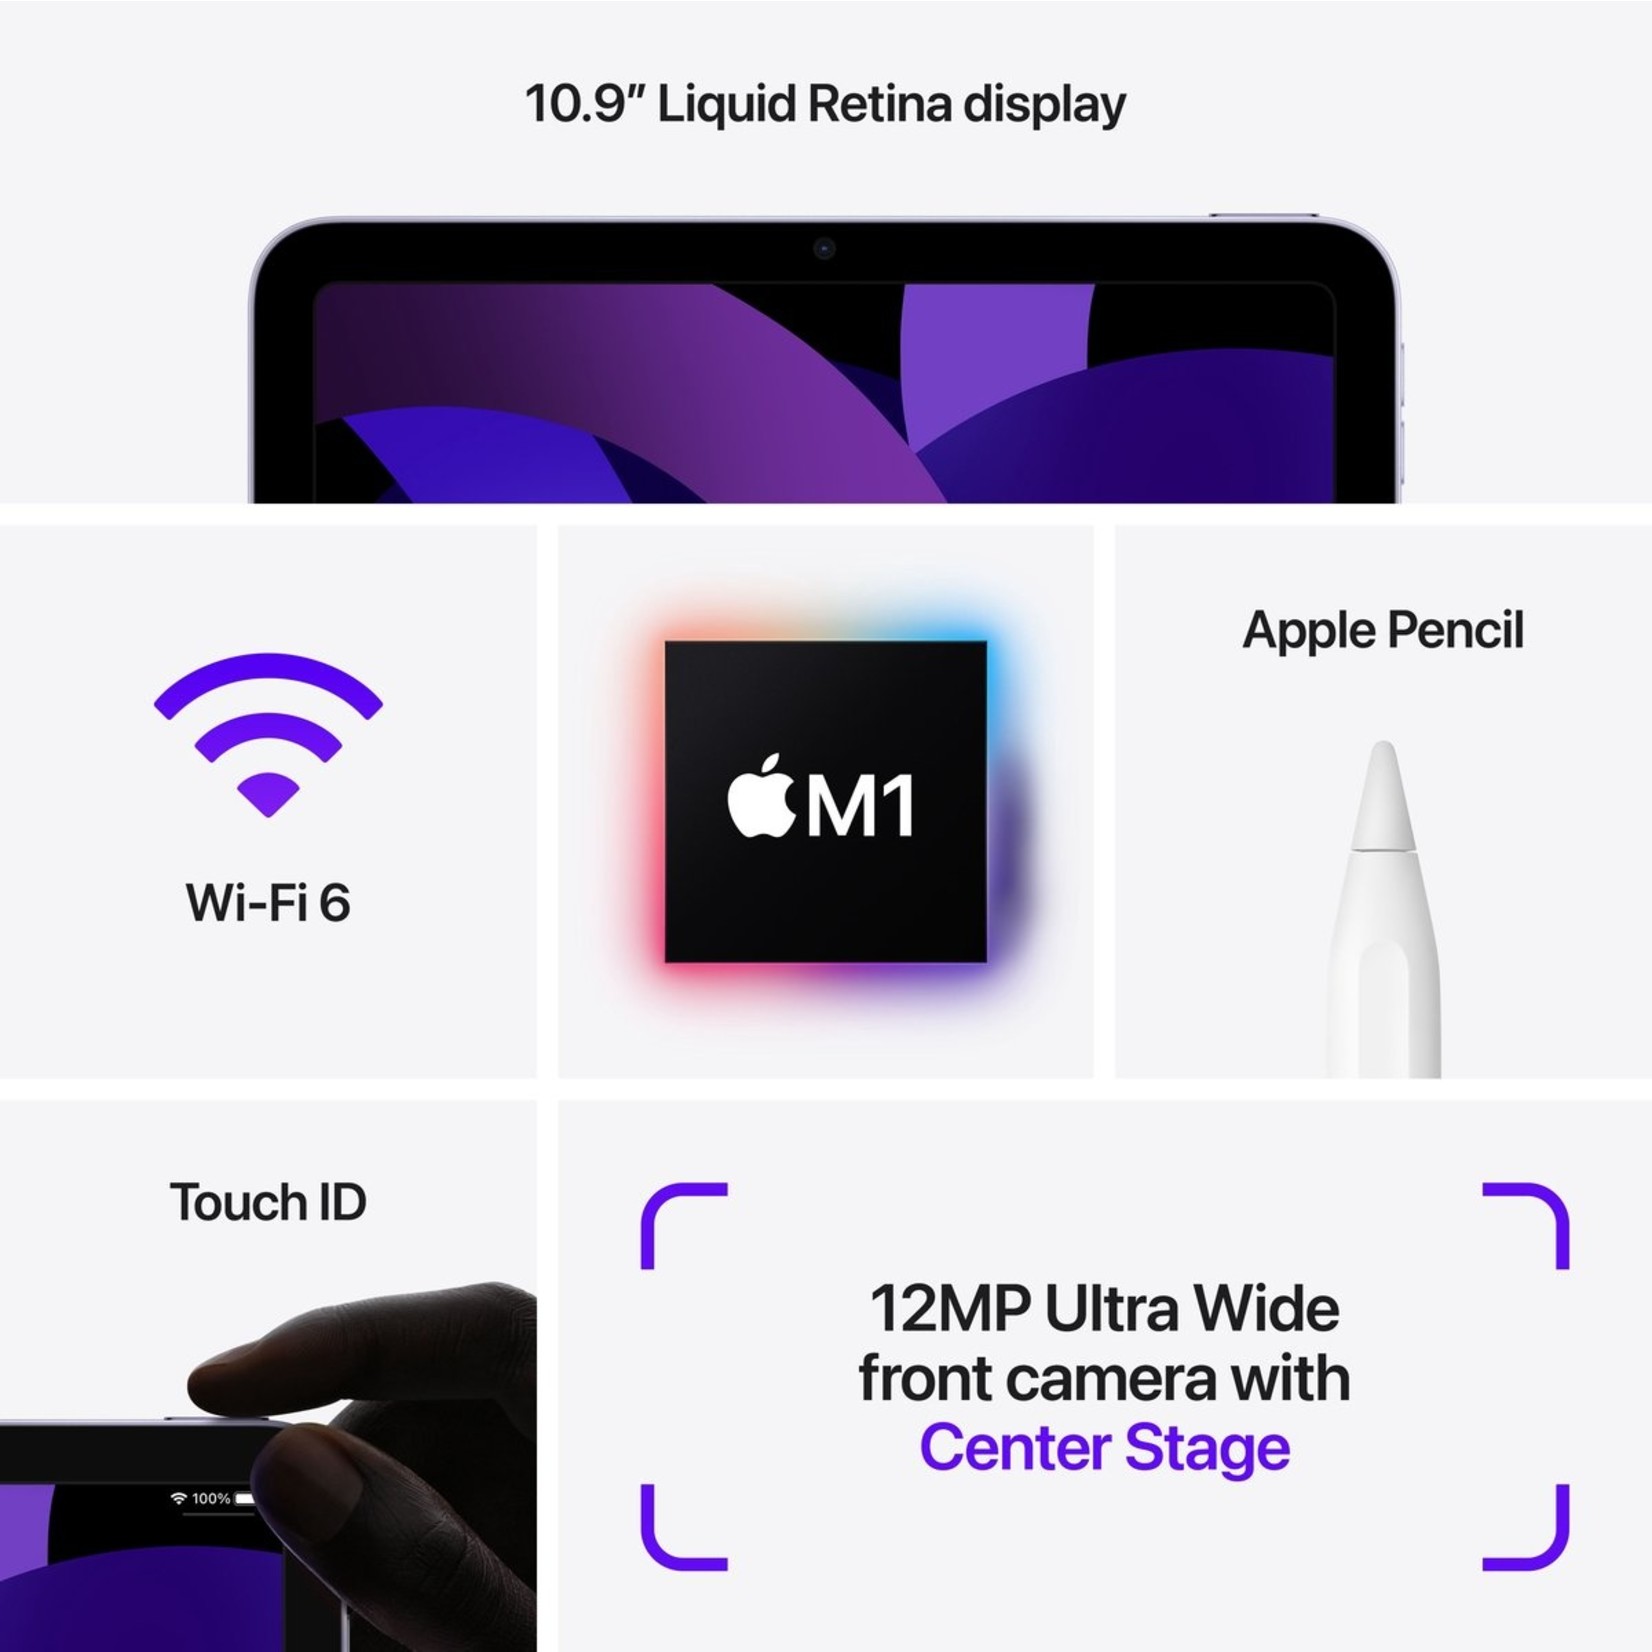 Apple iPad Air (2022) 10.9 inch Wifi Wit